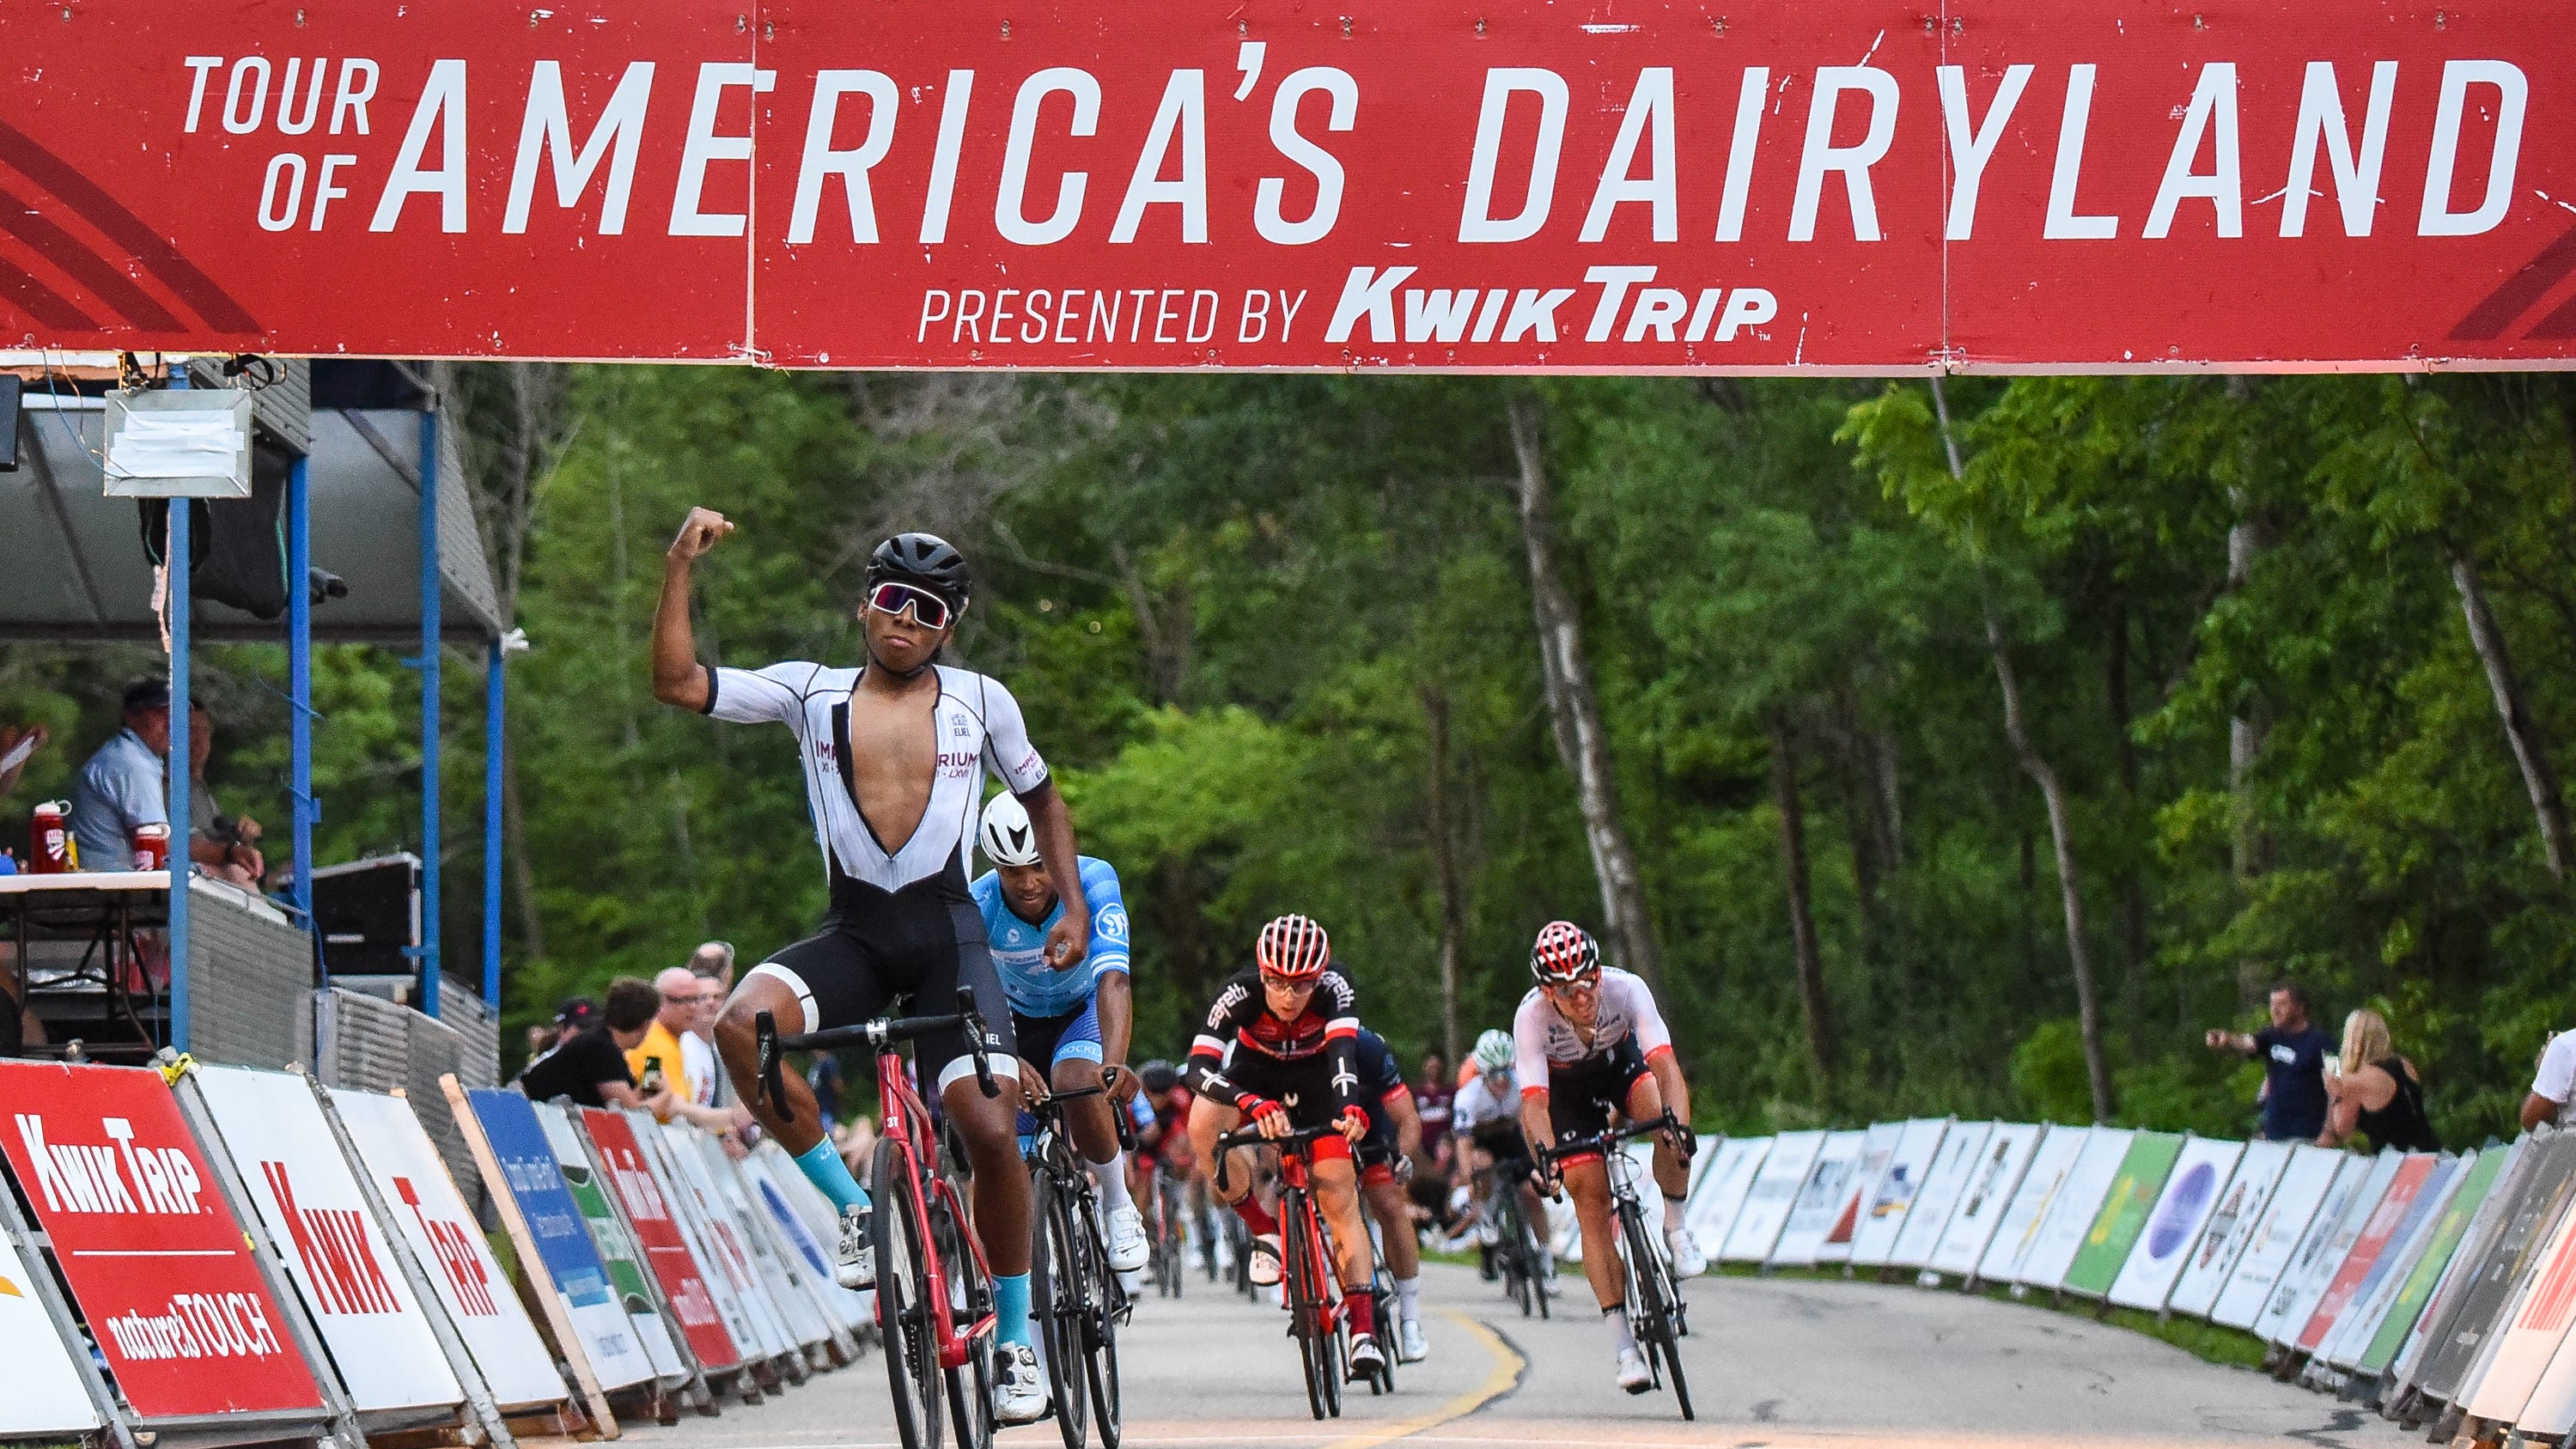 tour of america's dairyland bike race